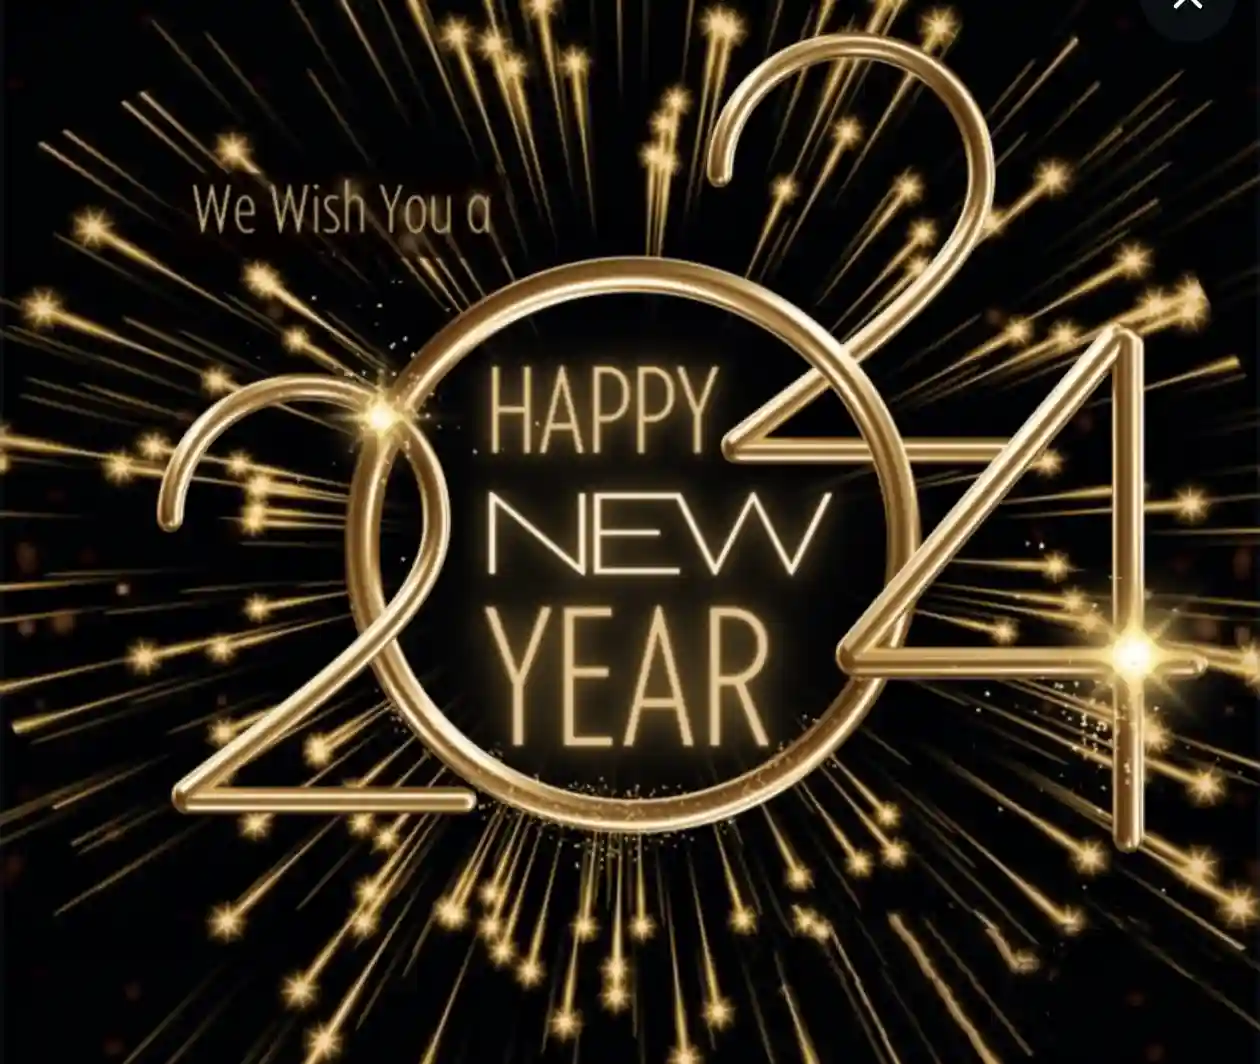 Happy New Year 2024 Wishes: প্রিয়জনদের জানান নতুন বছরের শুভেচ্ছাবার্তা, স্ট্যাটাস, শায়েরি ও পিকচার